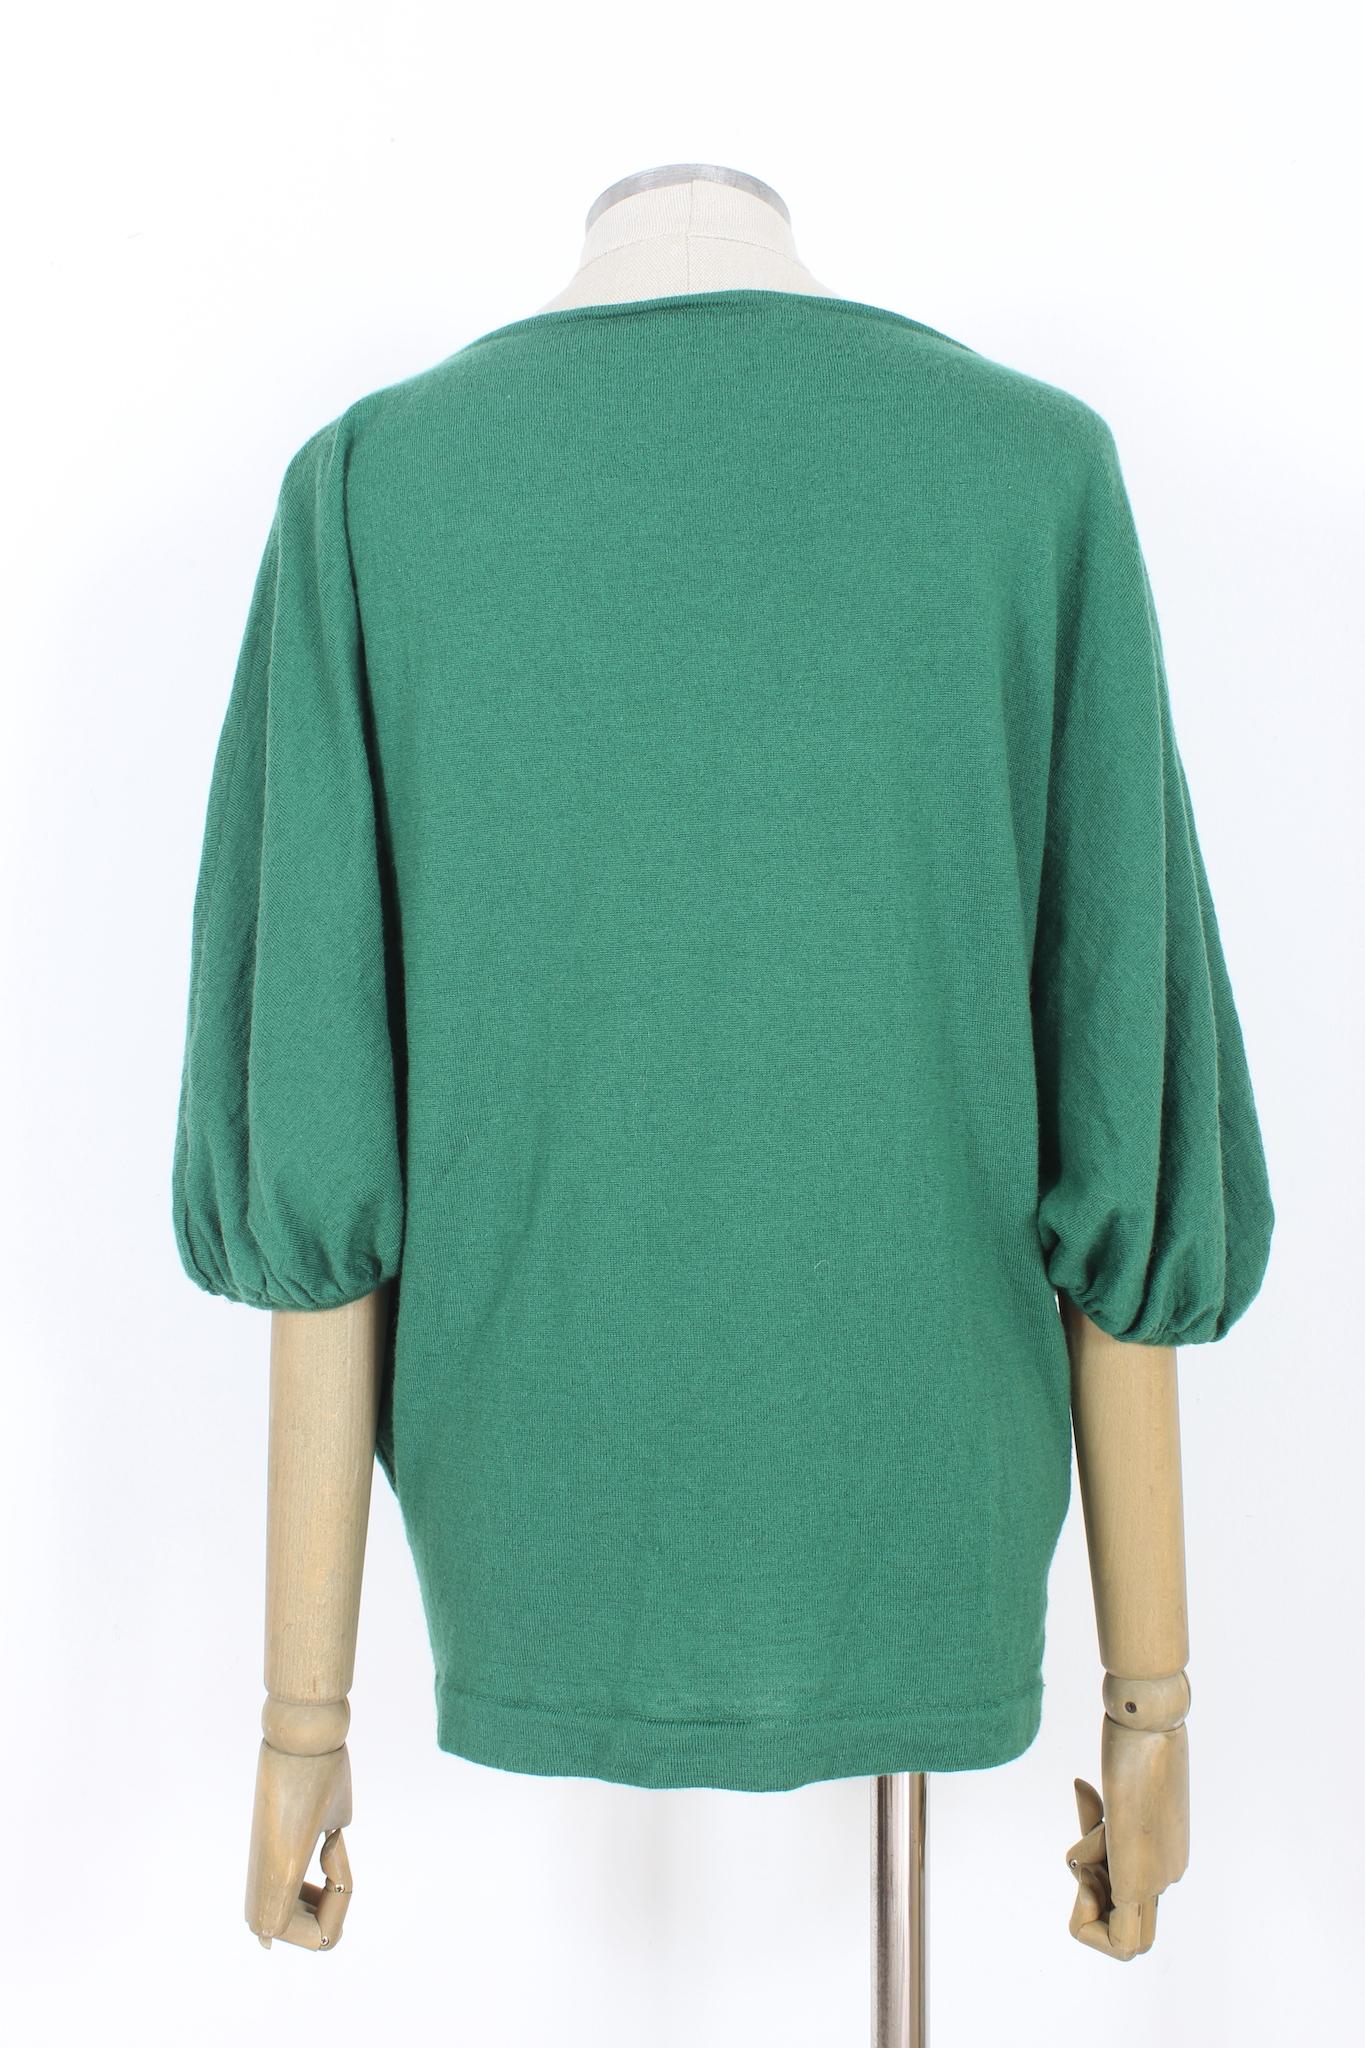 Alberta Ferretti Wool Green Casual Sweater 2000s For Sale 1